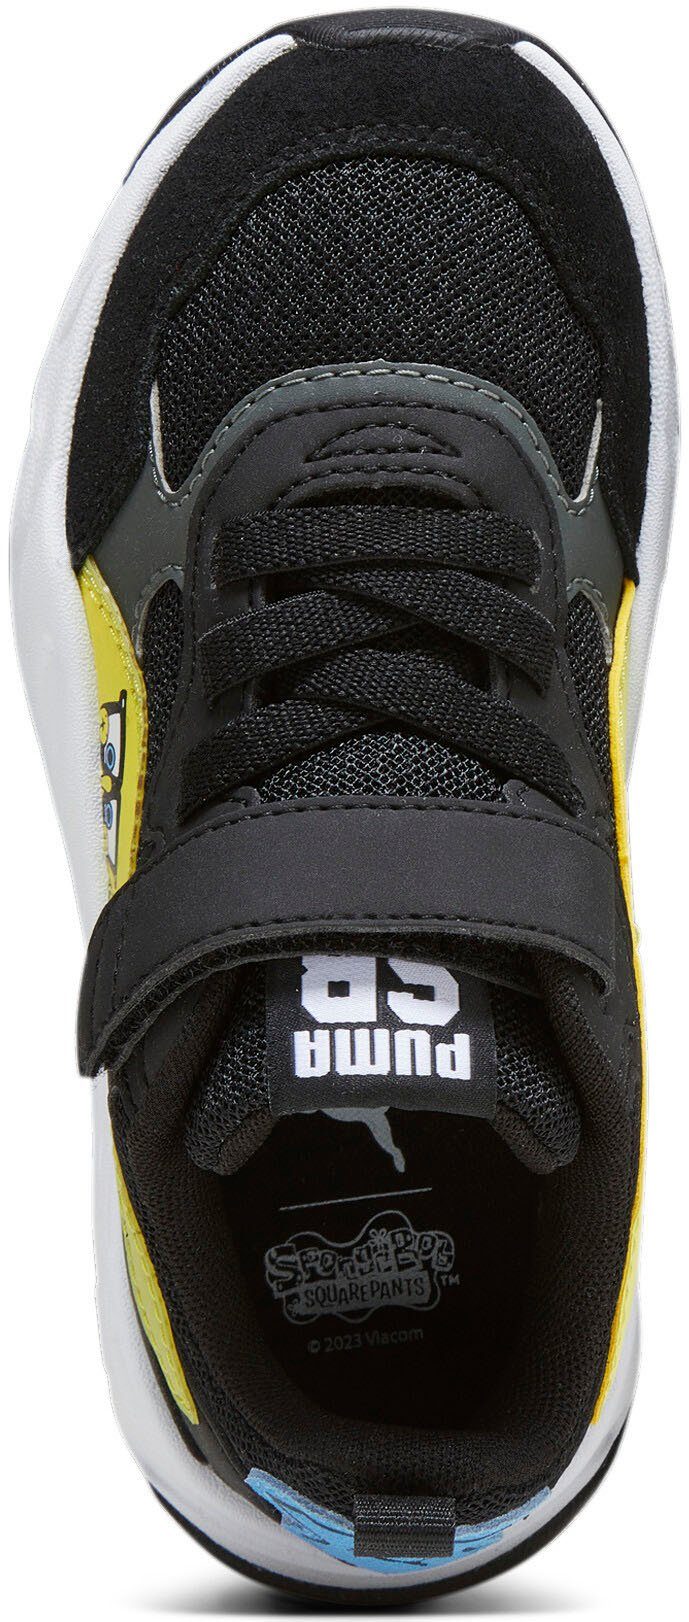 OTTO PUMA SPONGEBOB online AC+ | TRINITY Sneakers PS shop